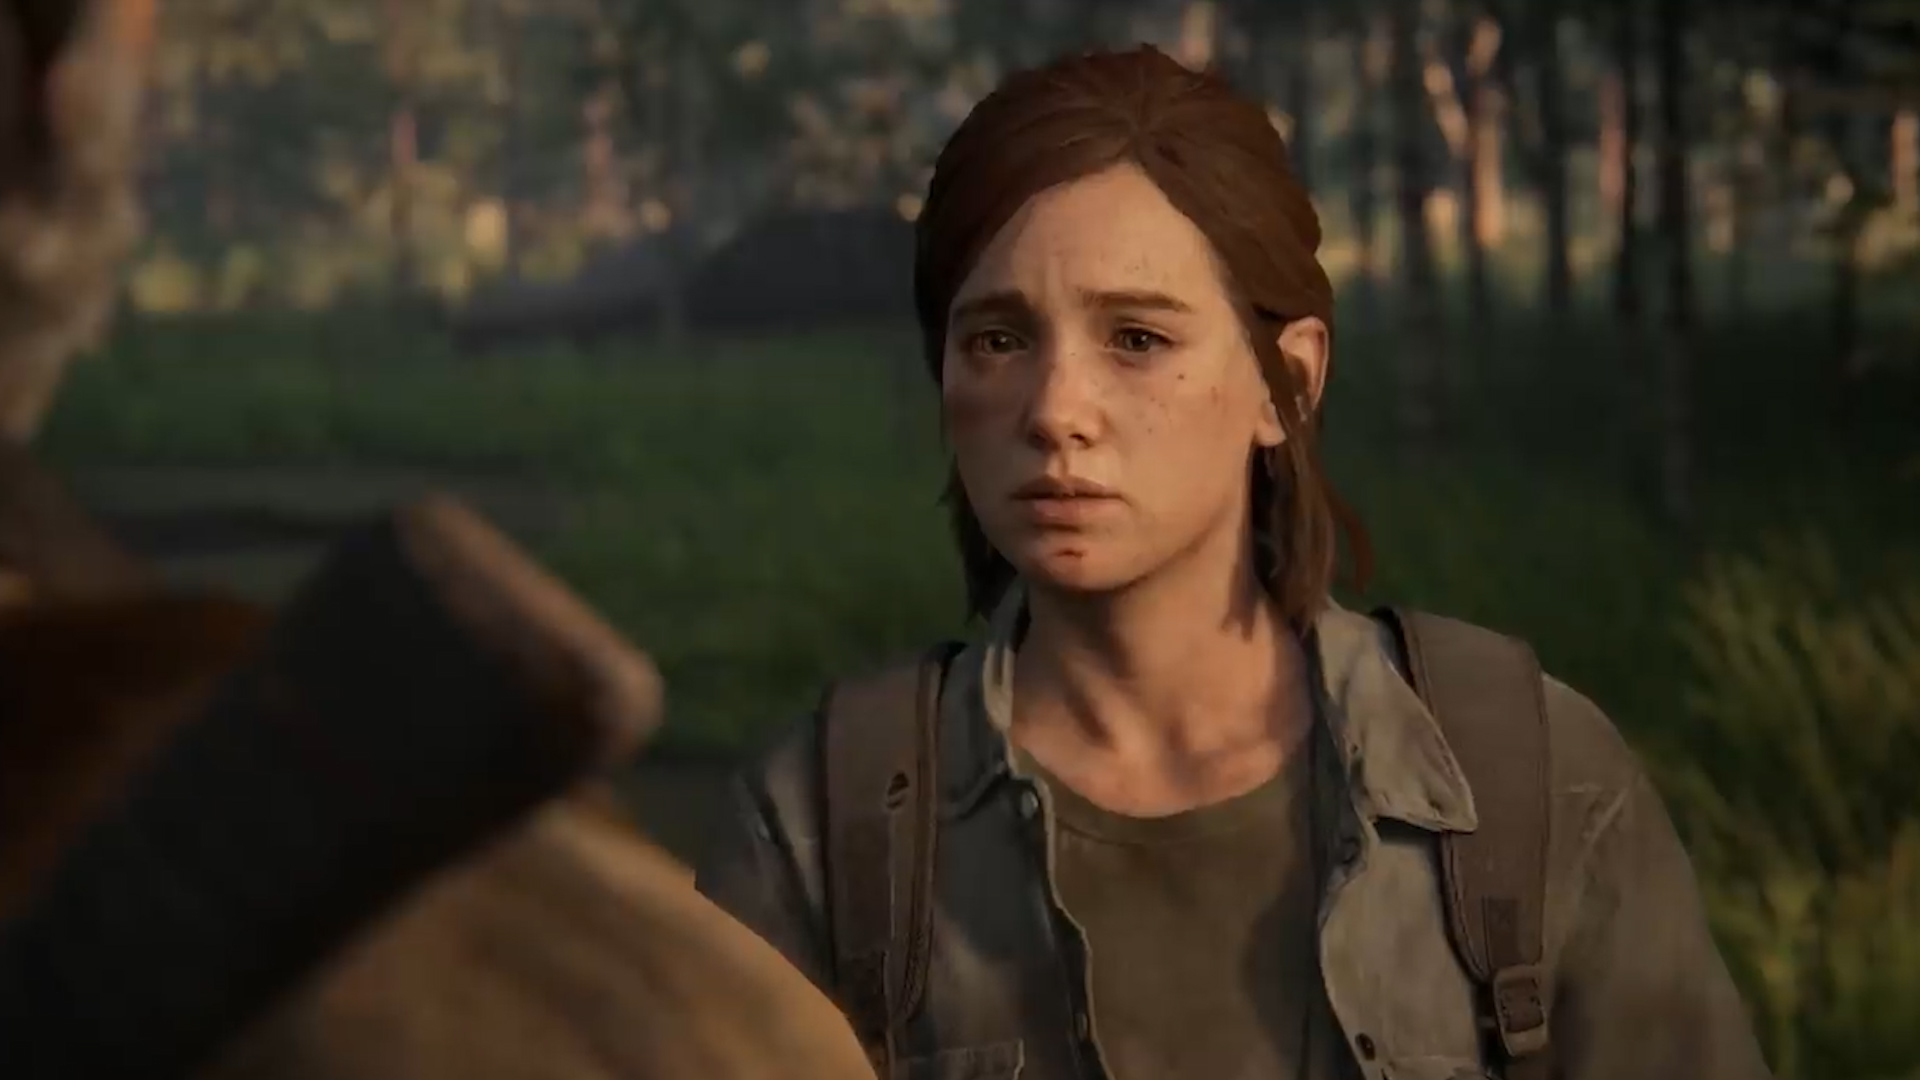 The Last of Us presentado en la Argentina - [IRROMPIBLES] El gamer no  muere, respawnea